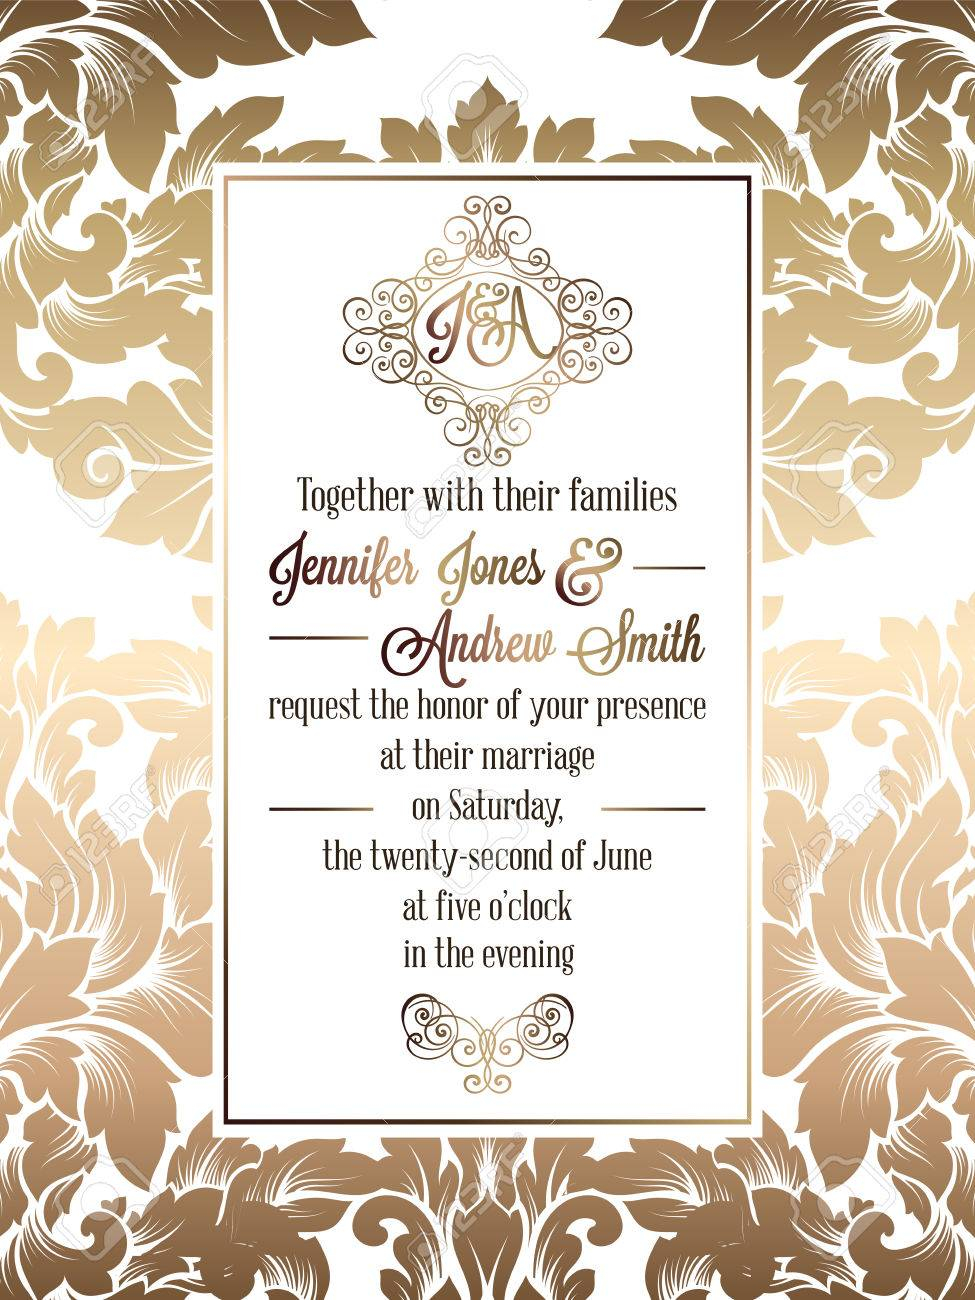 Vintage Baroque Style Wedding Invitation Card Template Elegant within size 975 X 1300